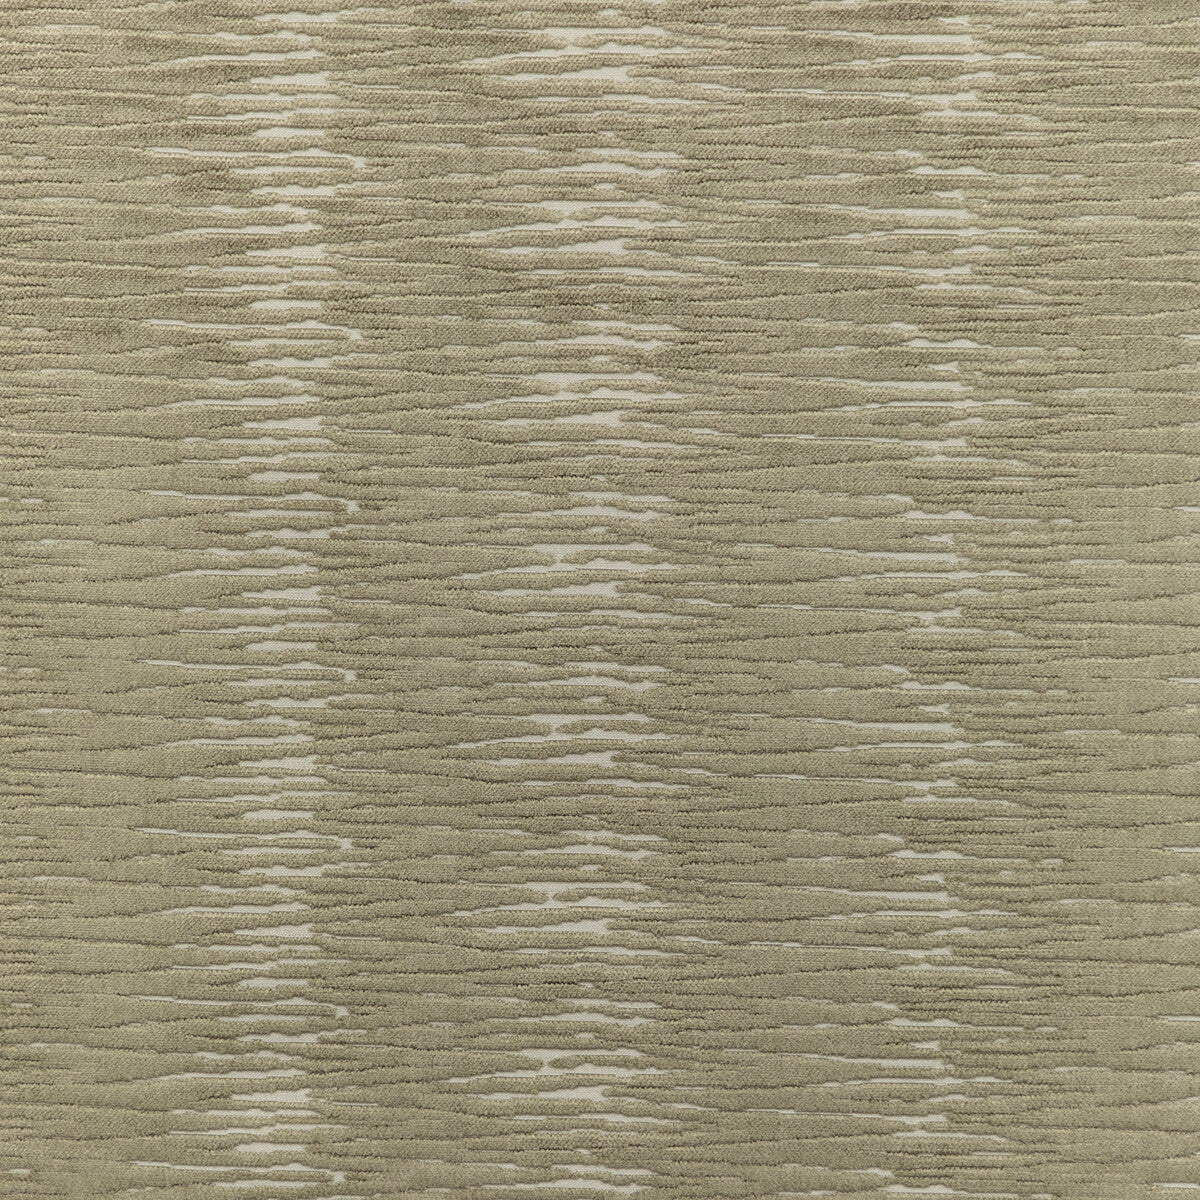 Kravet Design fabric in 37008-106 color - pattern 37008.106.0 - by Kravet Design in the Modern Velvets collection